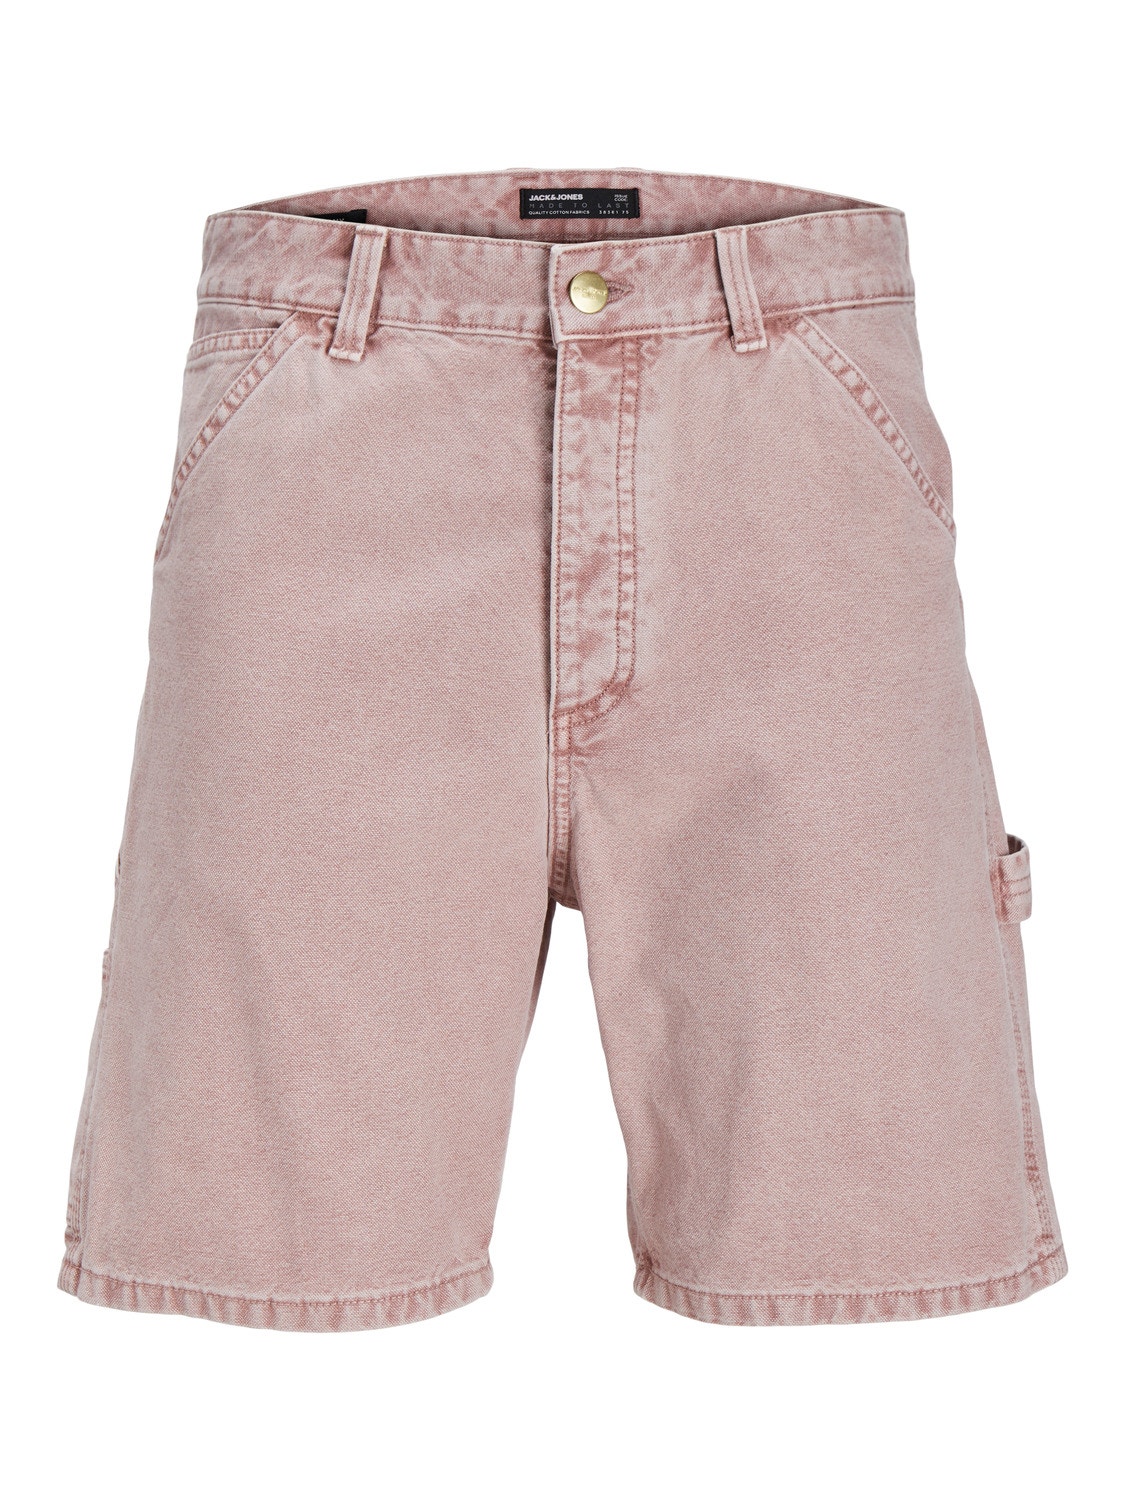 Jack & Jones Loose Fit Denim shorts -Woodrose - 12252814